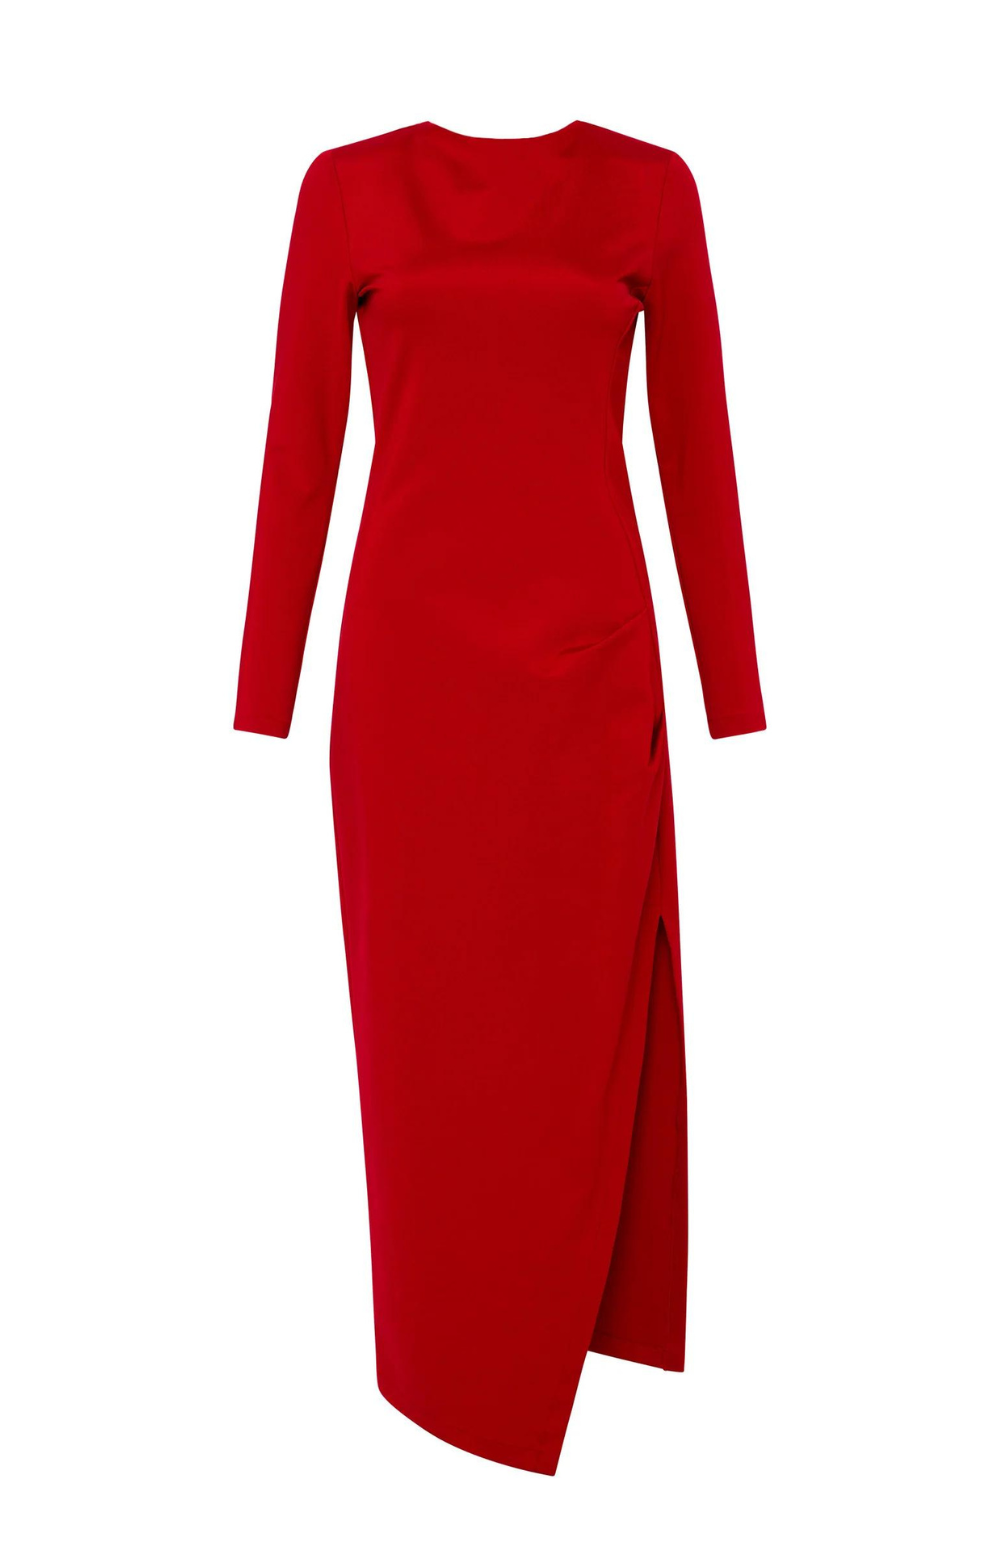 Moss & Spy - Brandy Dress in Deep Red